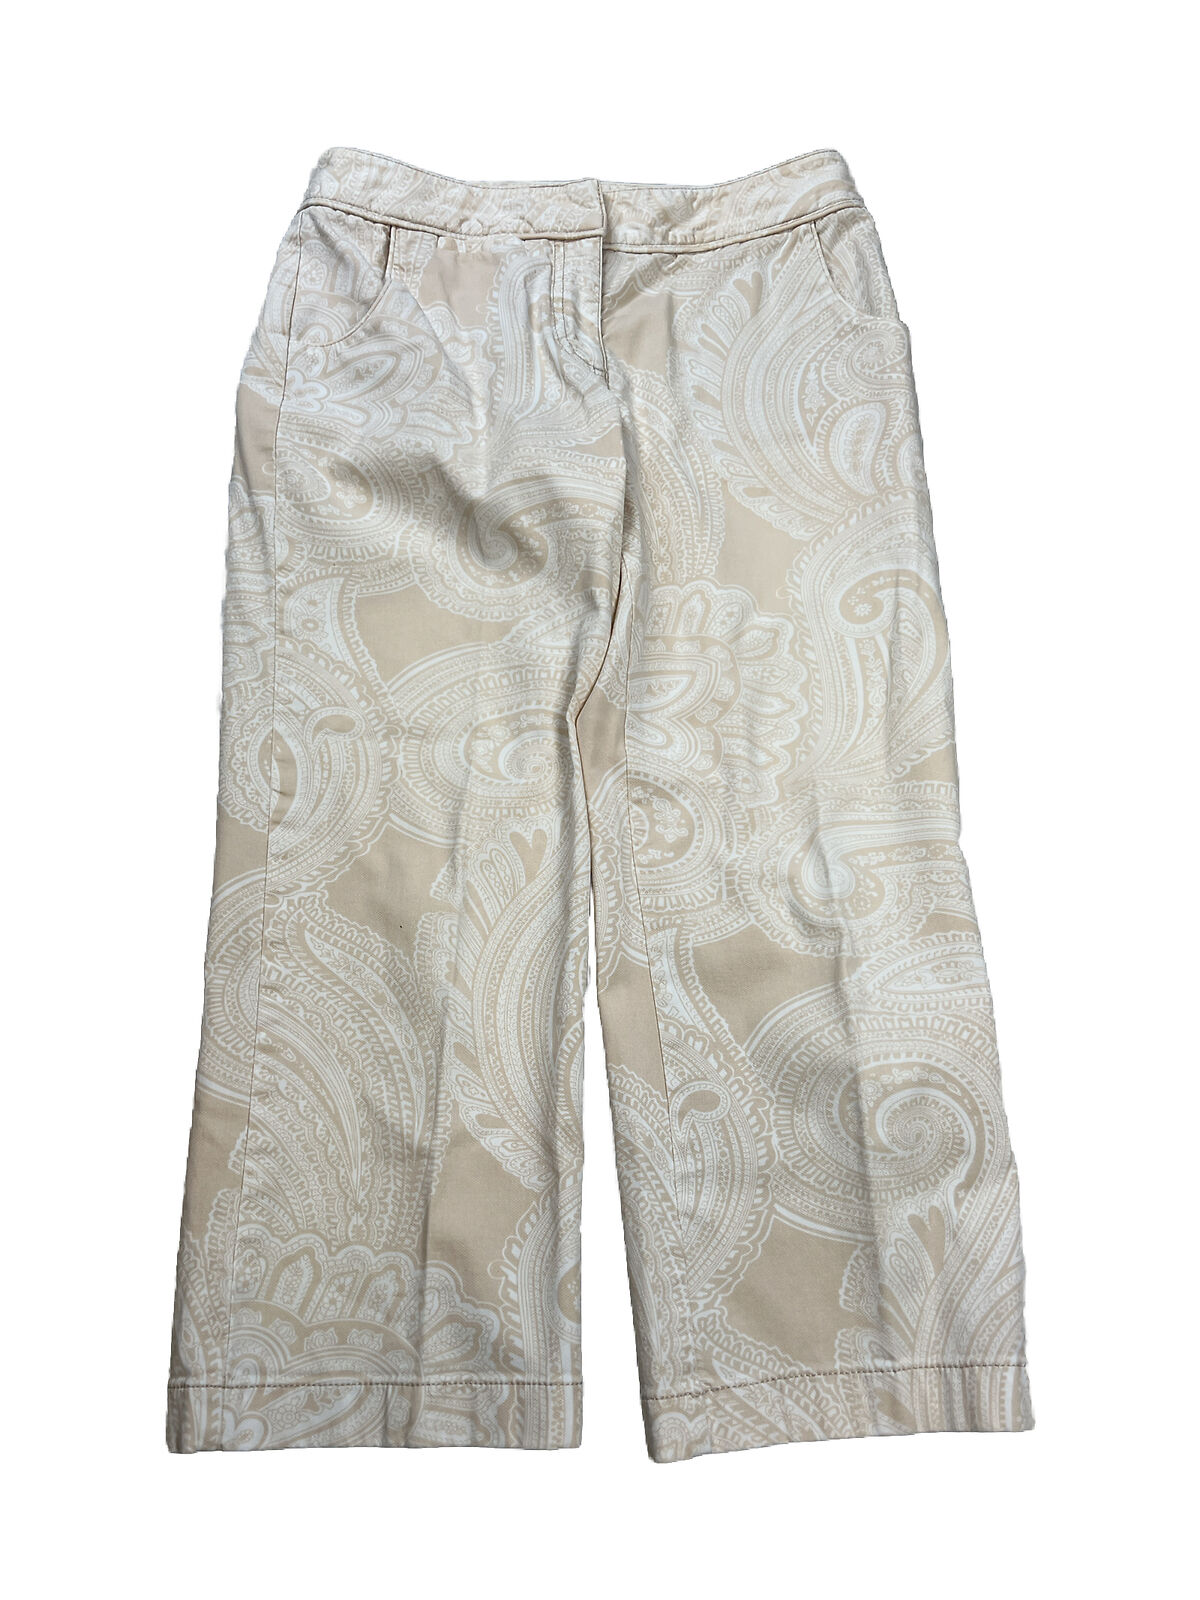 Ann Taylor Women's Beige Paisley Capri Pants - 2